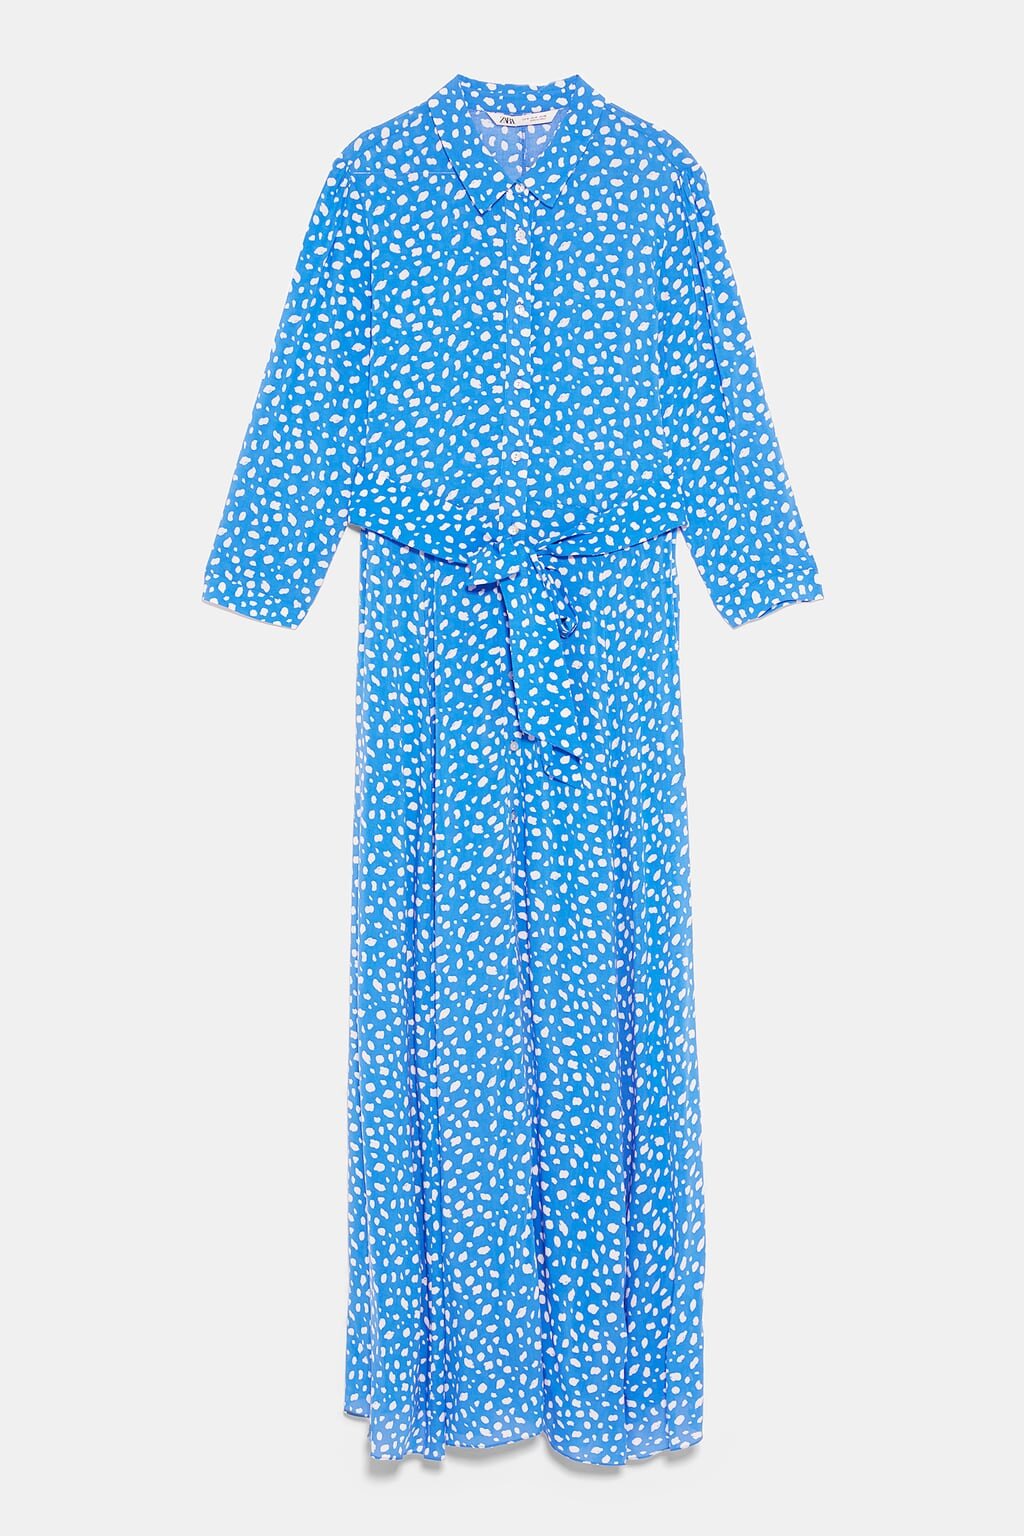 Zara Long Print Dress in Blue — The 